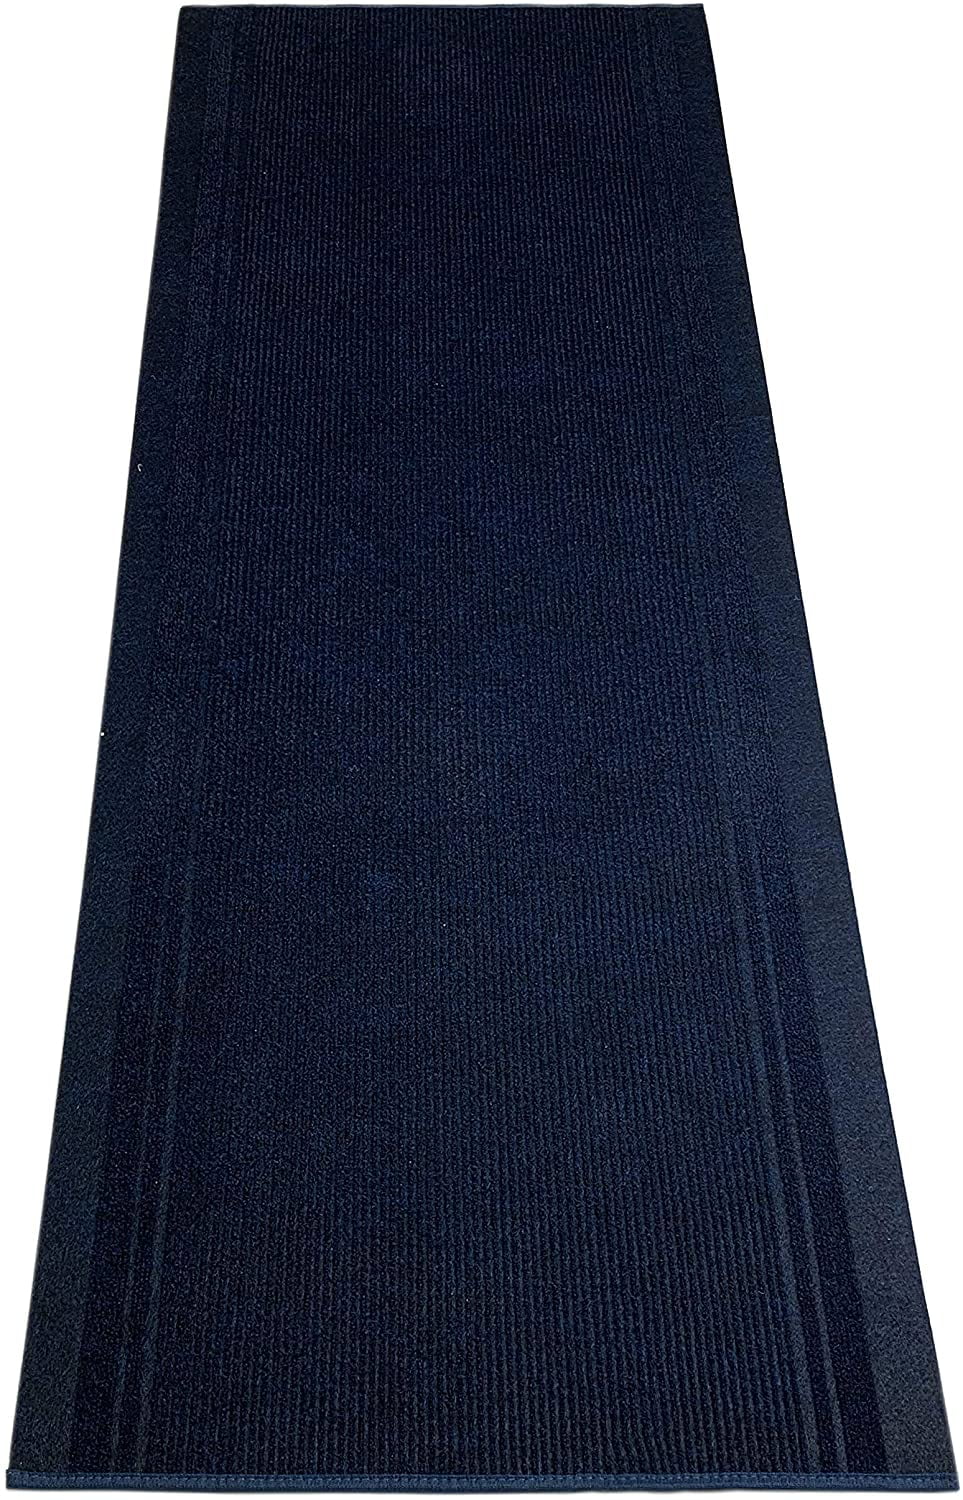 Custom Size Solid Navy Blue indoor Runner Rug Soft Rug Non Skid Slip Resistant 